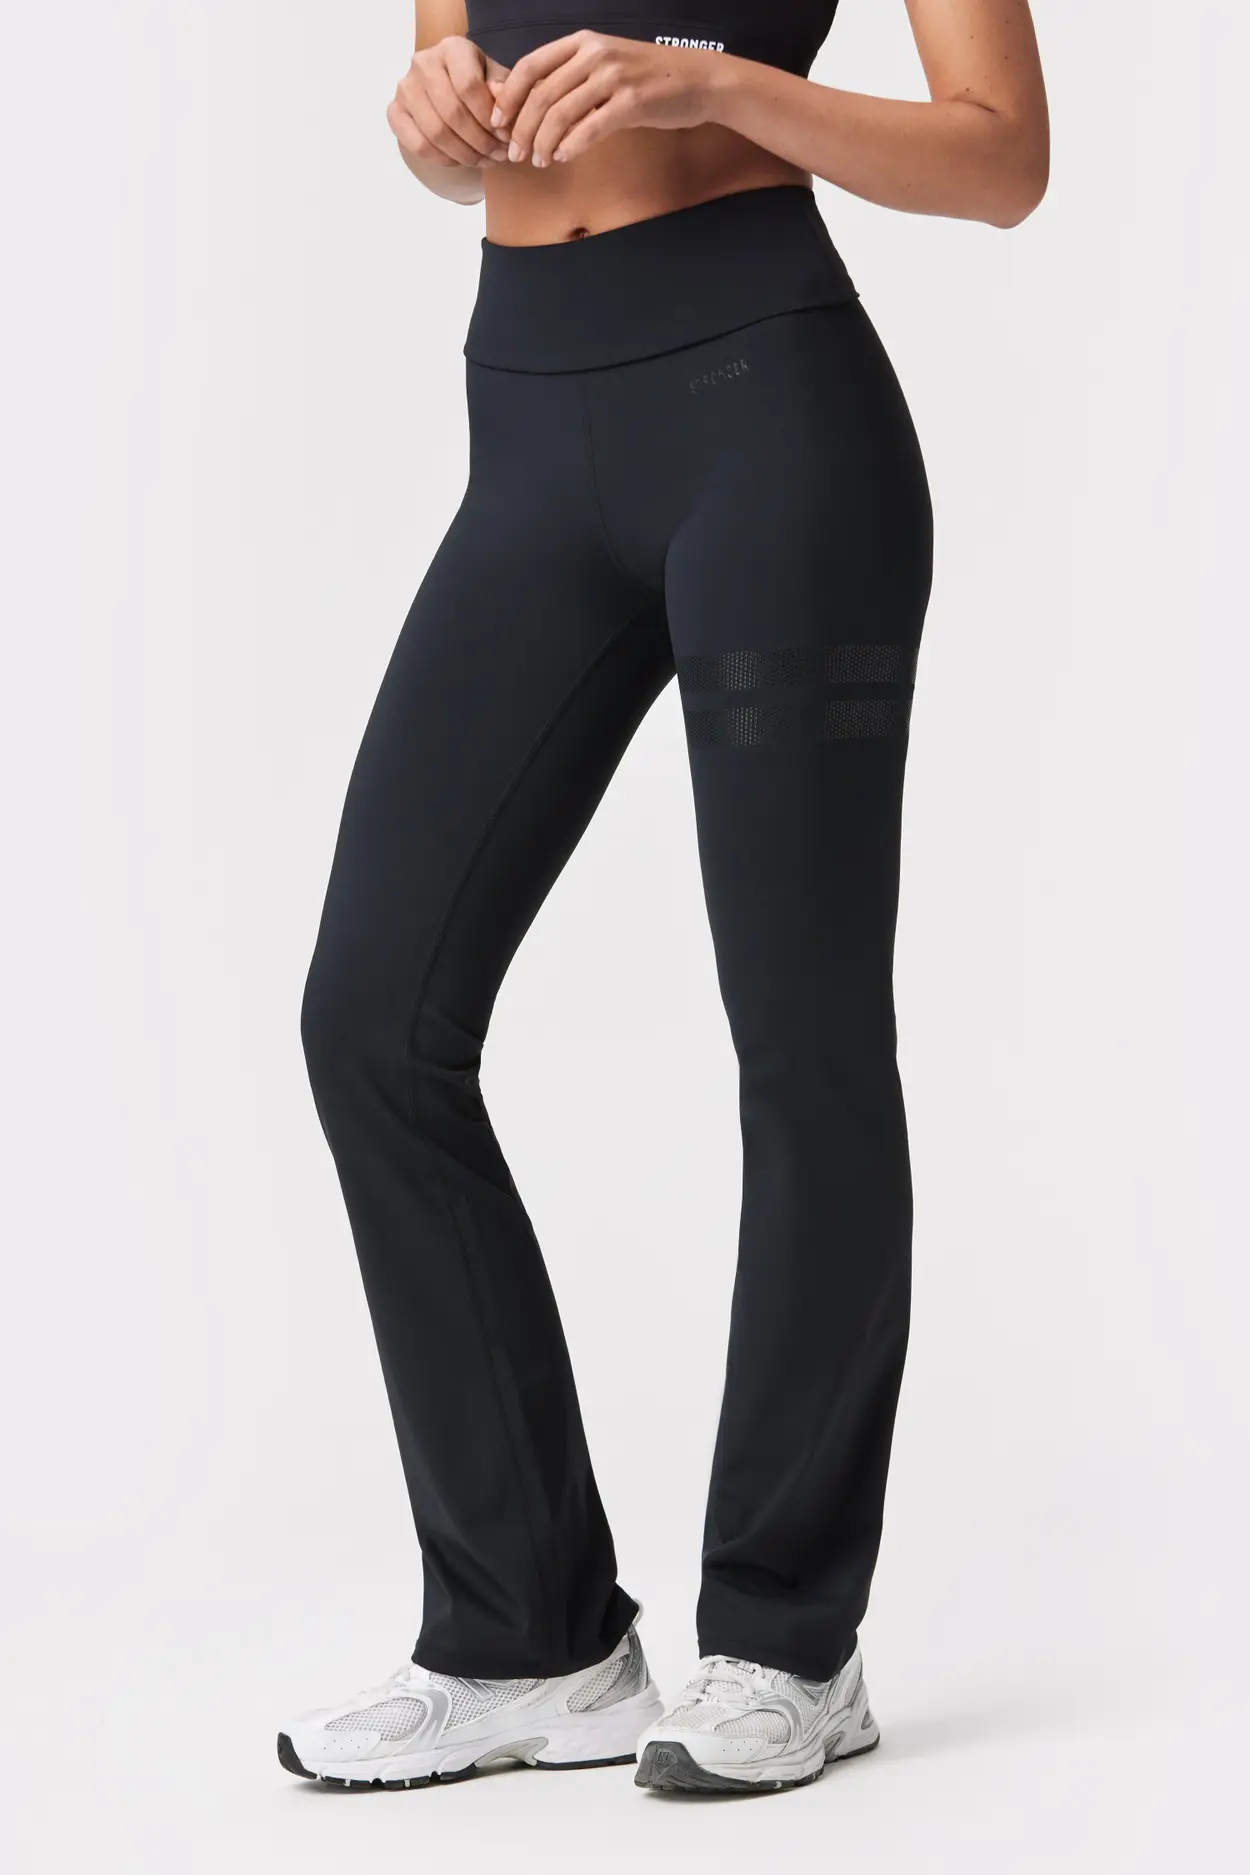 HDE Women's Color Block Fold Over Waist Yoga Pants Flare Leg Workout  Leggings (Charcoal Gray, Small) 